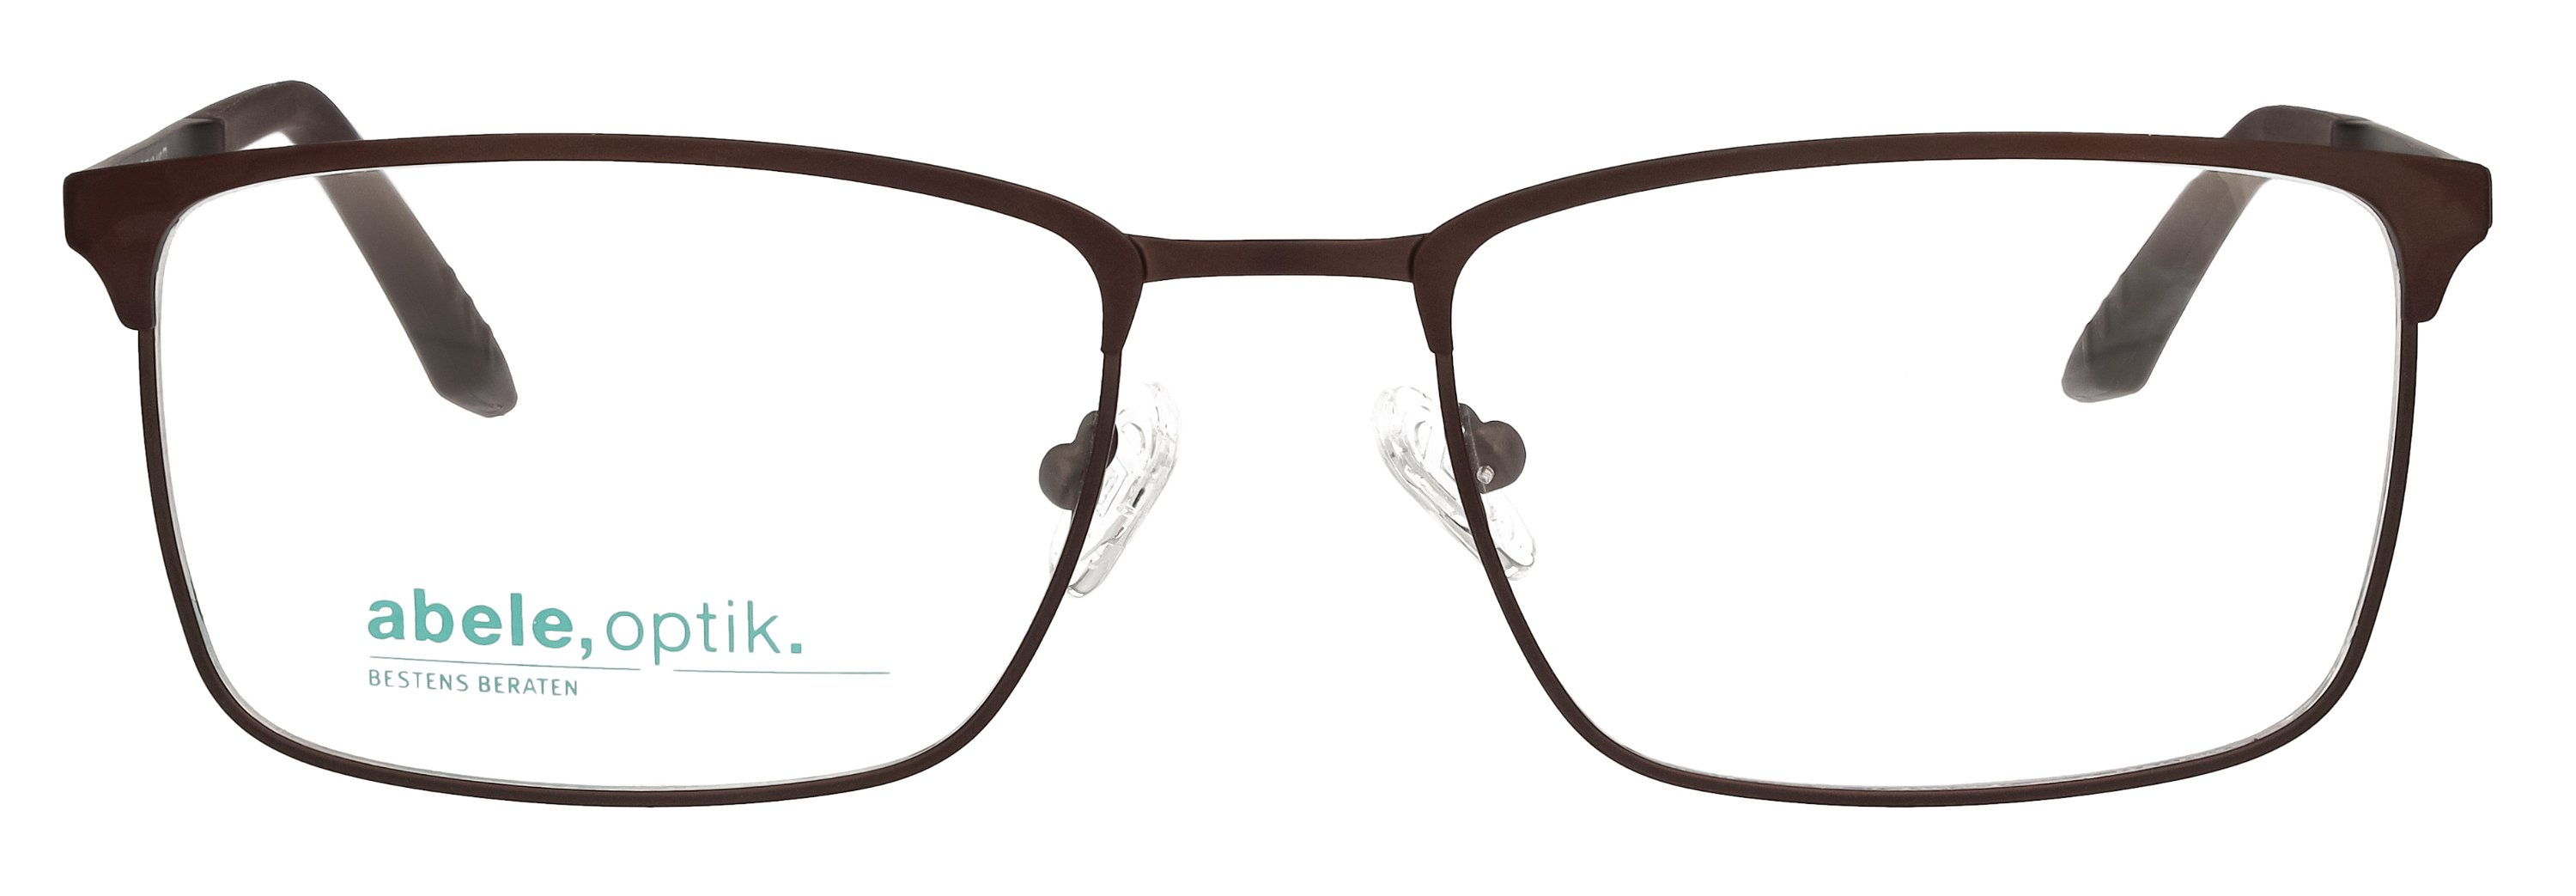 abele optik Brille für Herren in dunkelbraun matt 148252